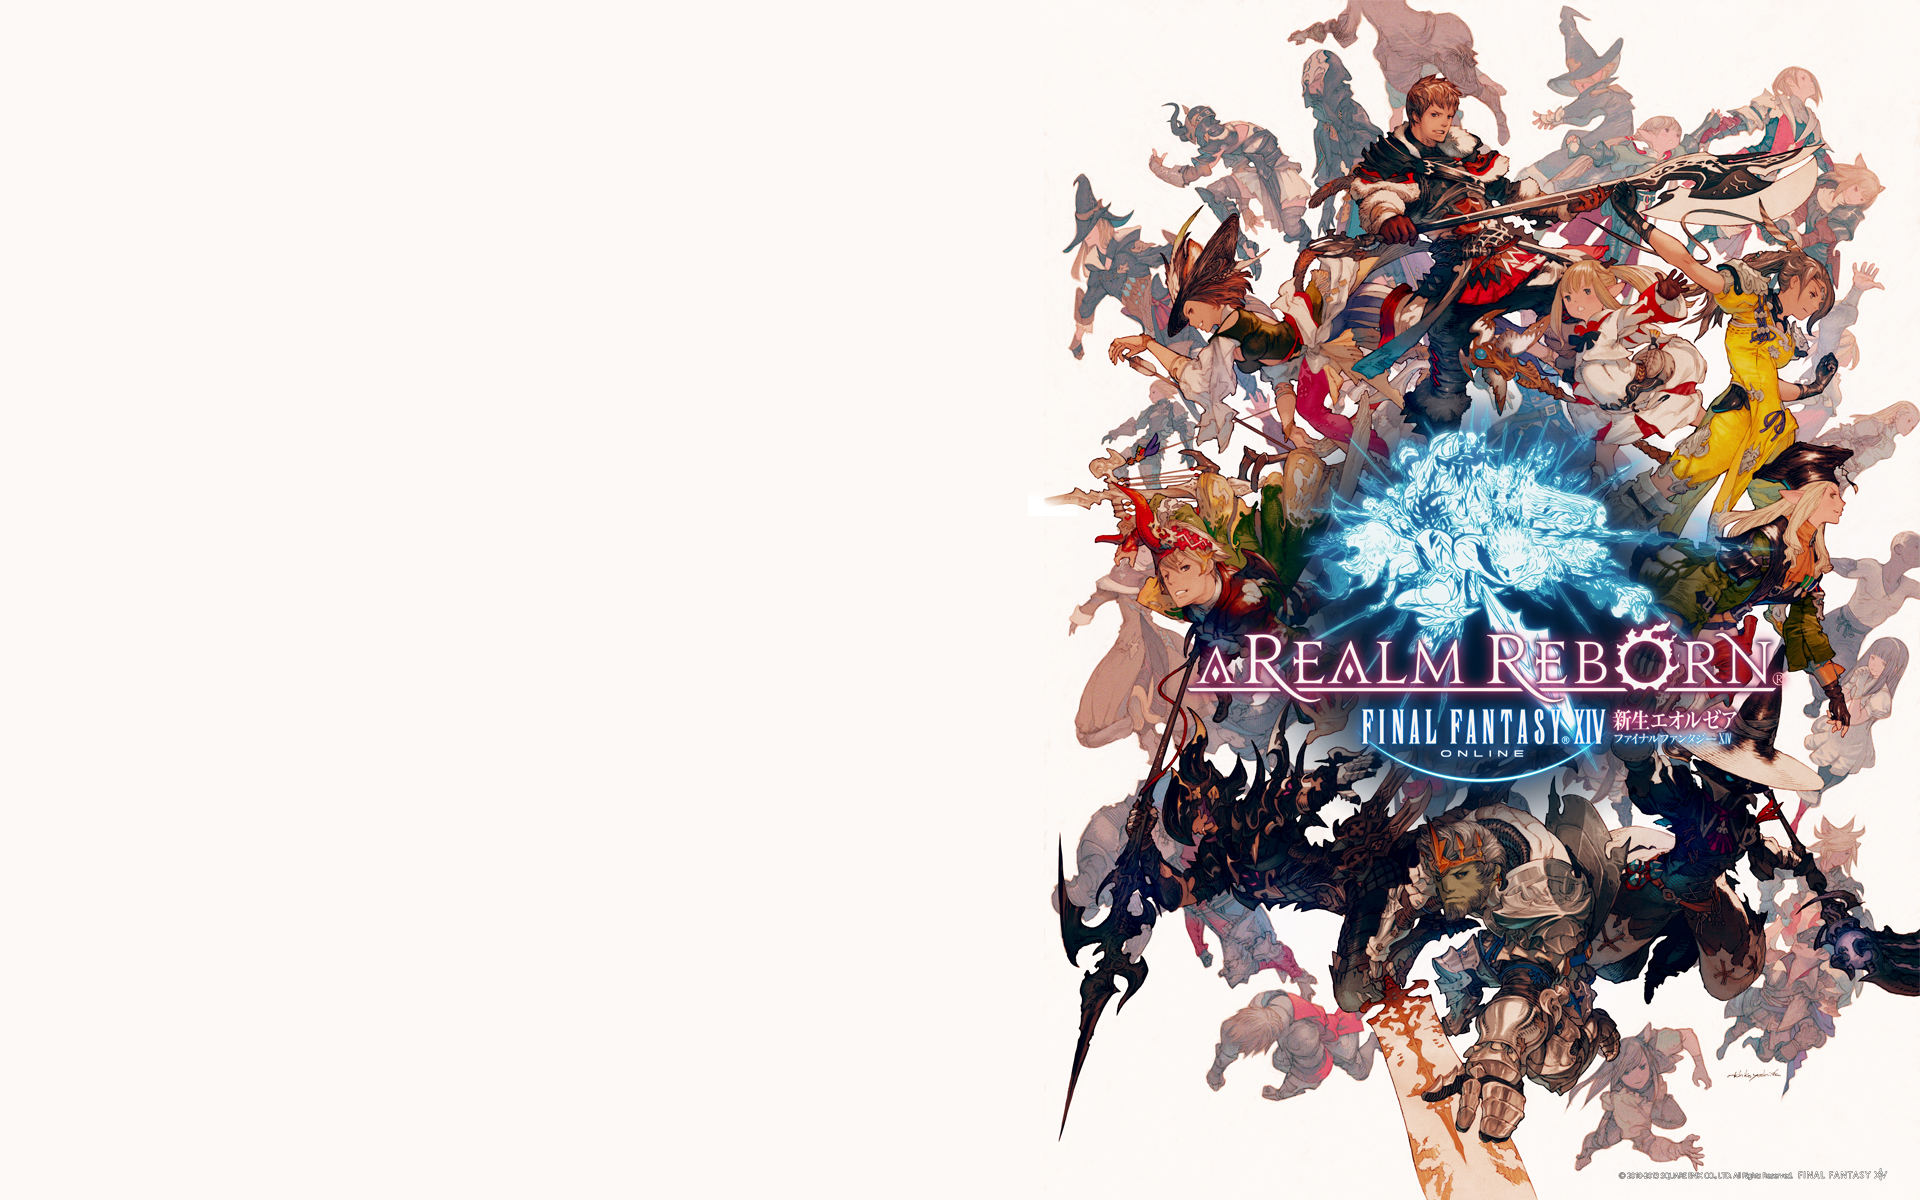 Final Fantasy Xiv Black Mage Wallpaper New White Image Revealed